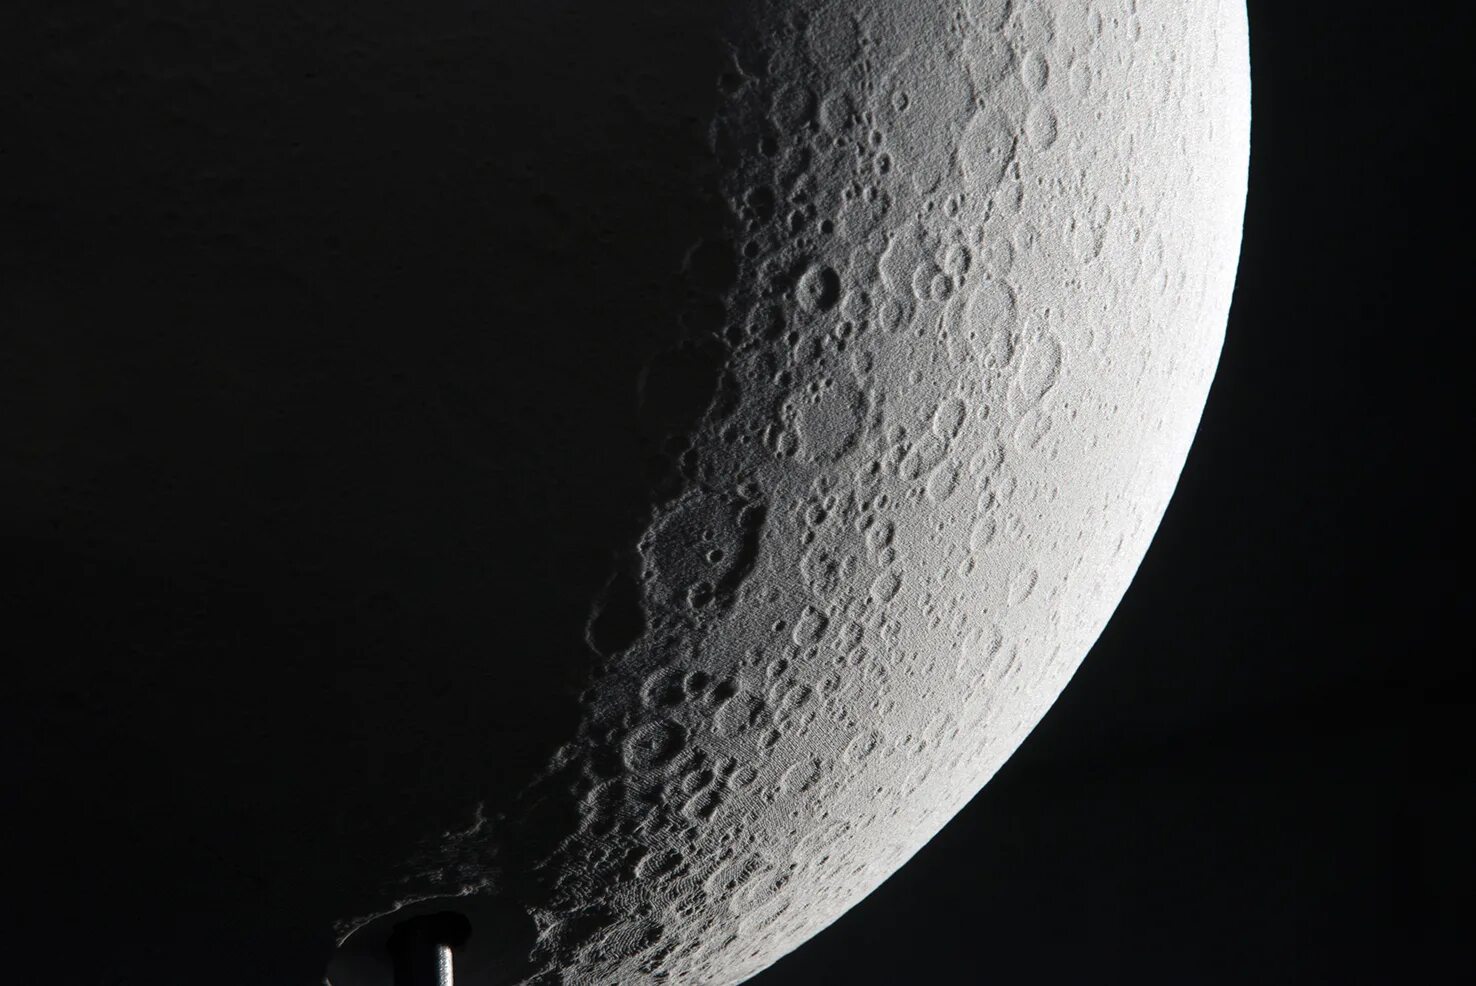 Аналог Луны. Кратер Клавий. Как выглядит Луна вблизи. Альбом Tycho. Луна в 10 м